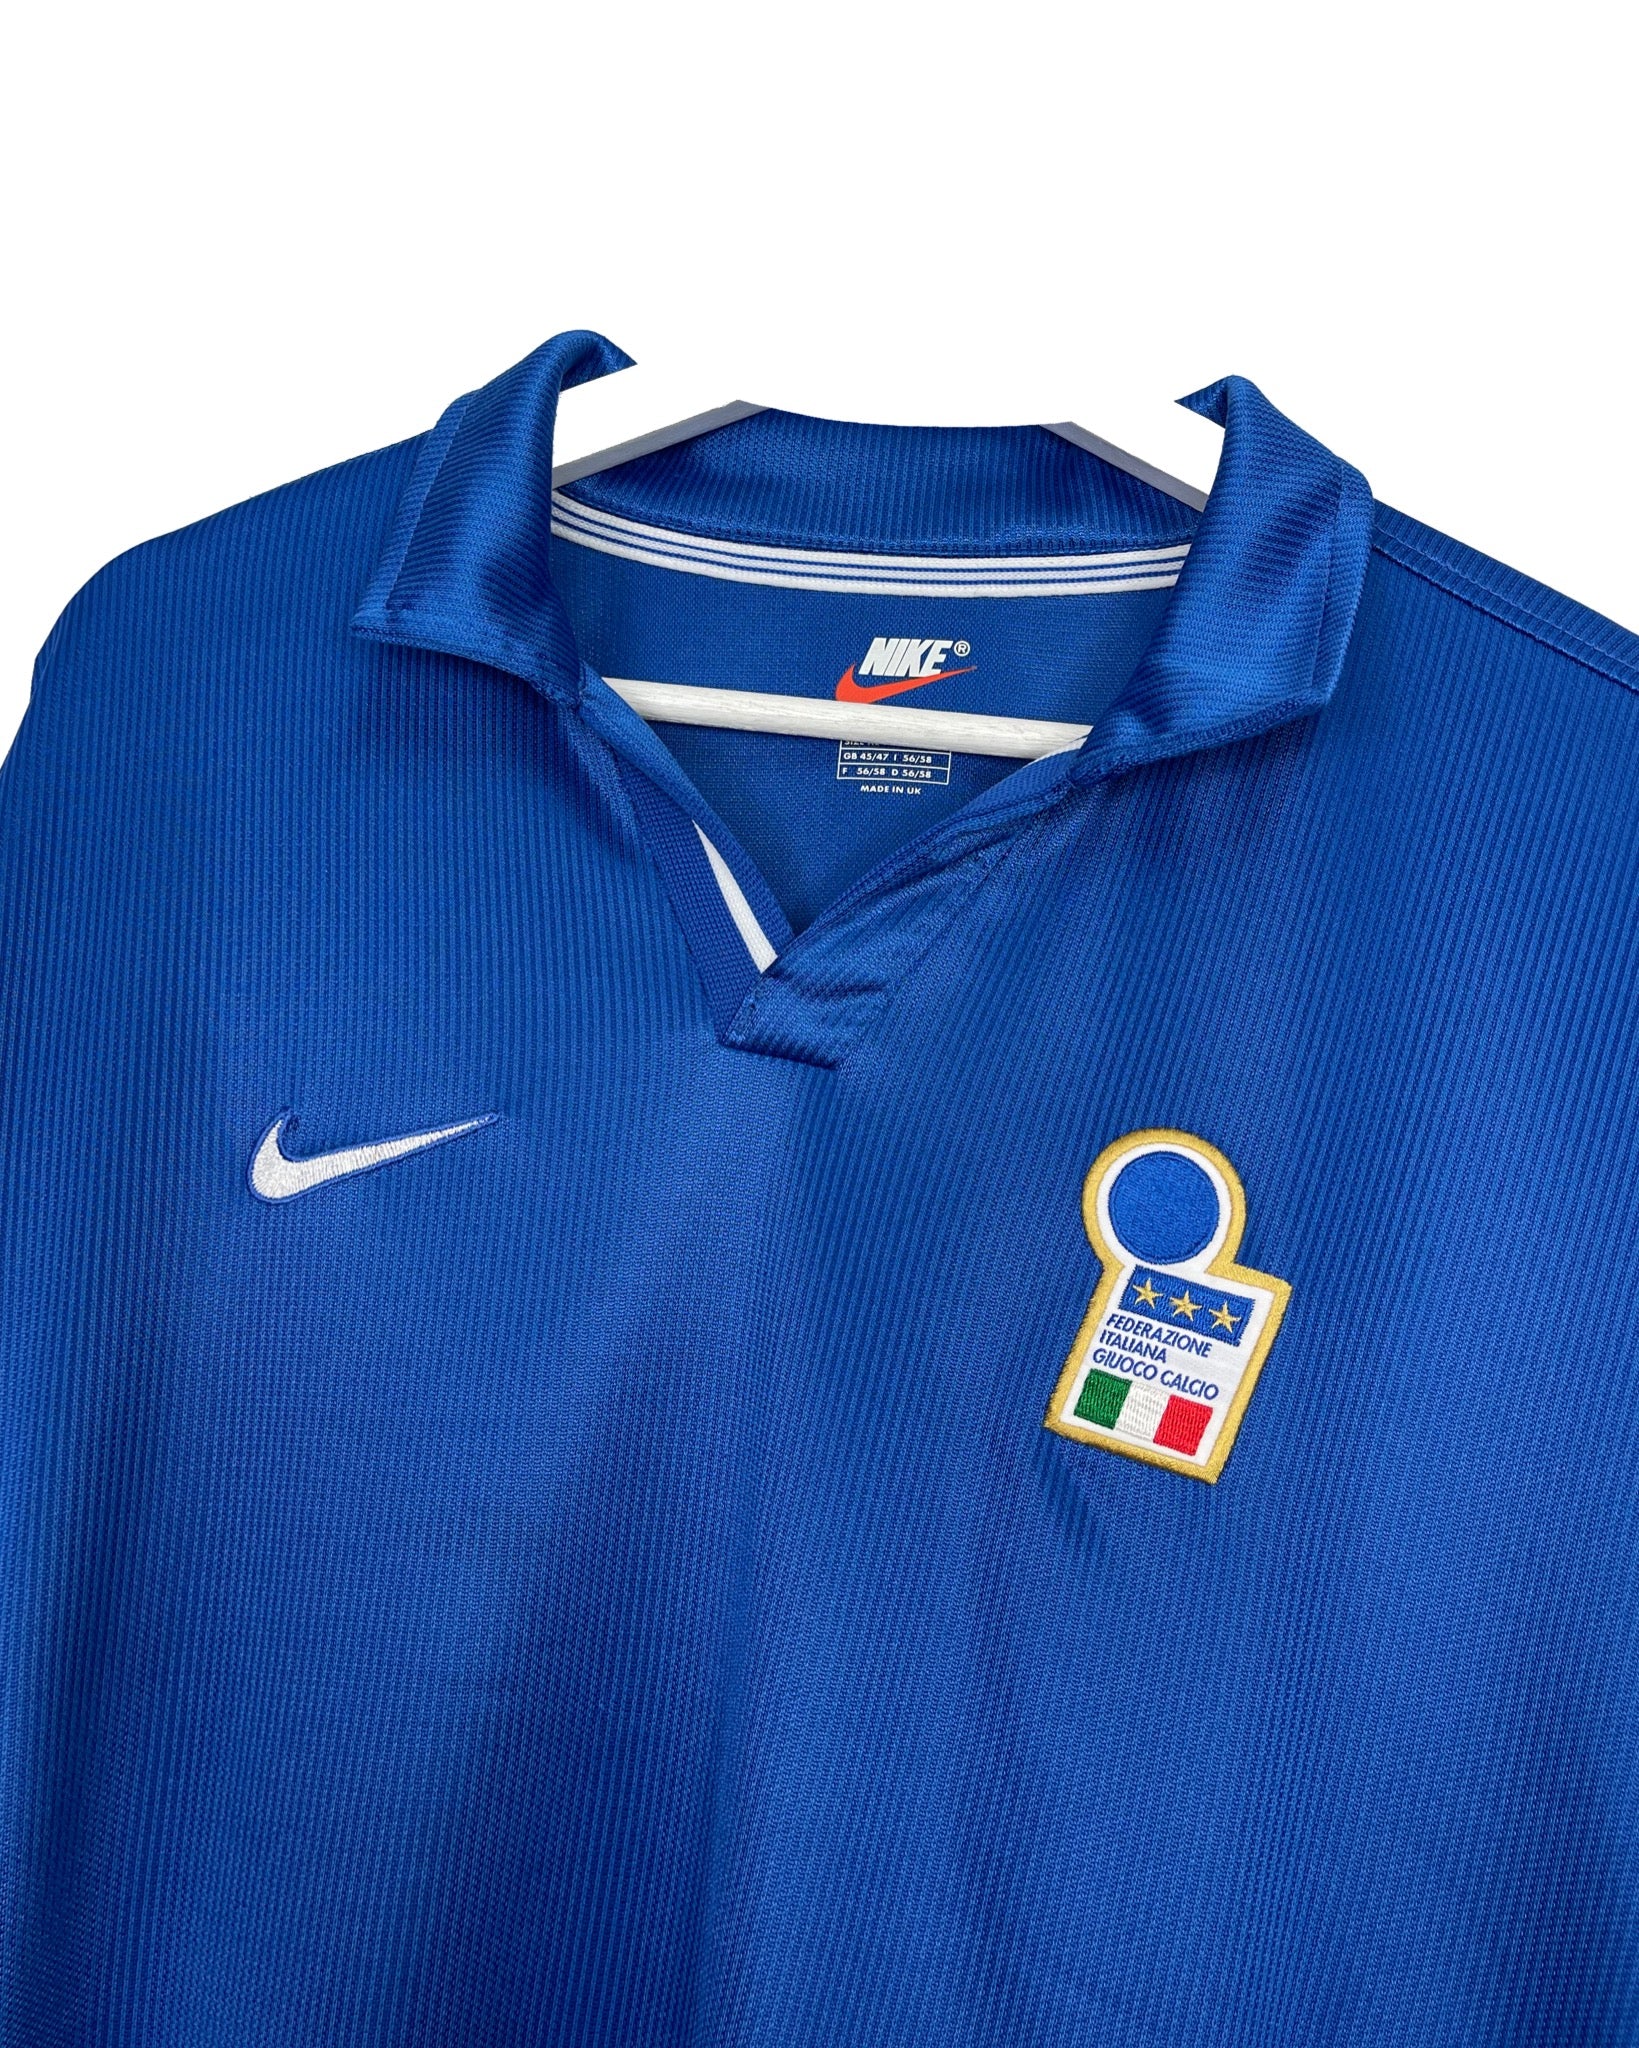  Maillot de football Nike Maillot de football - Italy 94' - XL - PLOMOSTORE